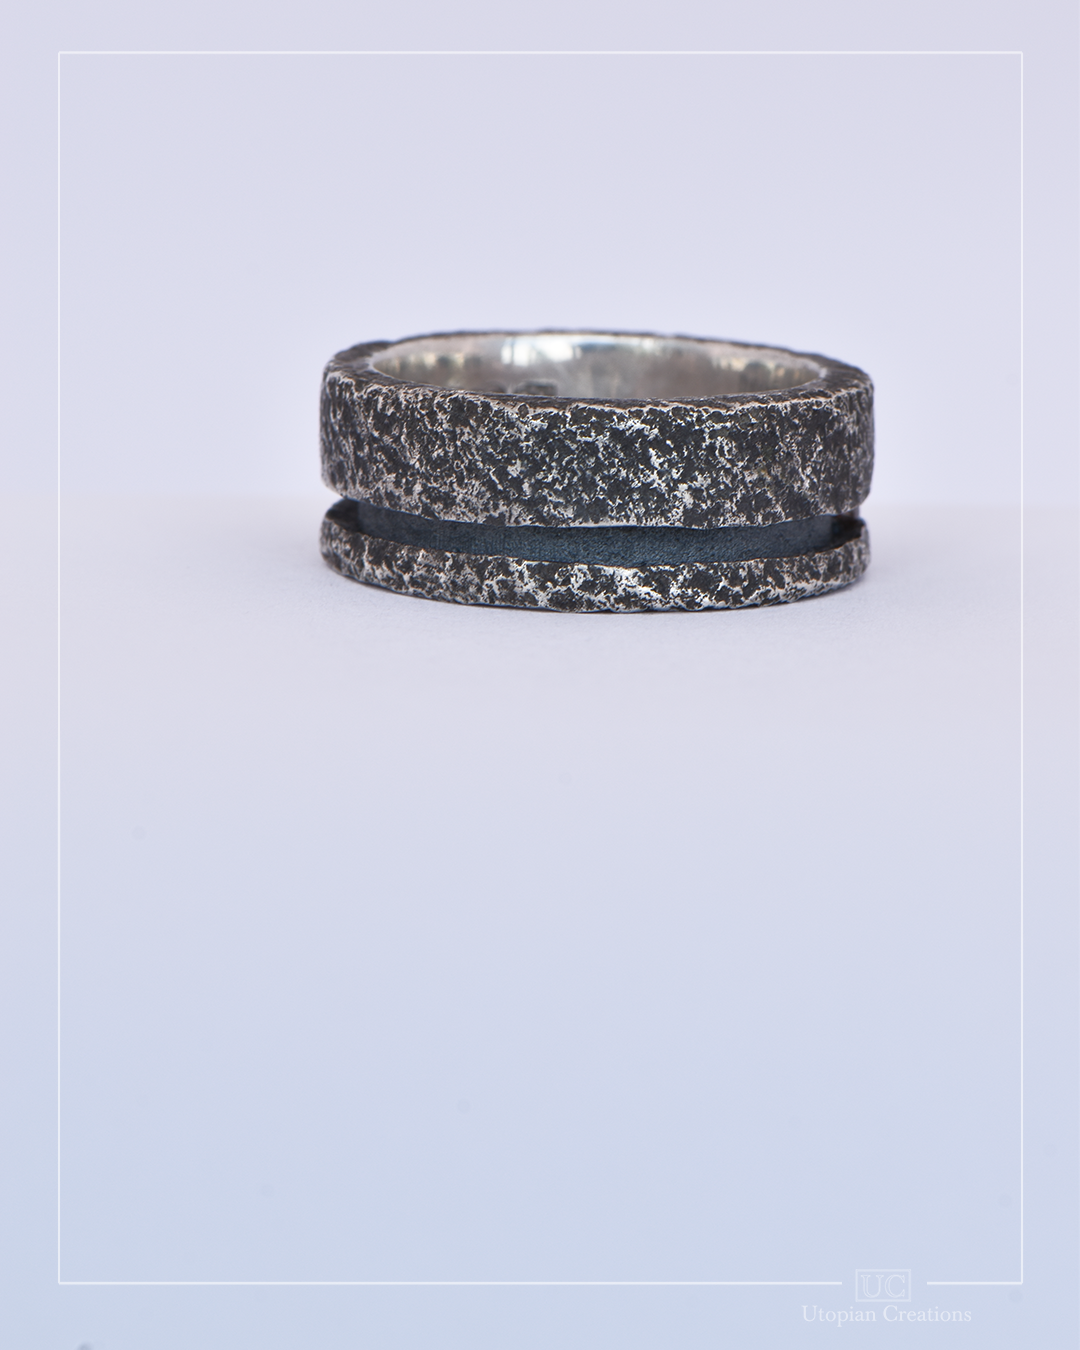 10mm Valen Ring - Sterling Silver & Australian Argyle Champagne Diamond